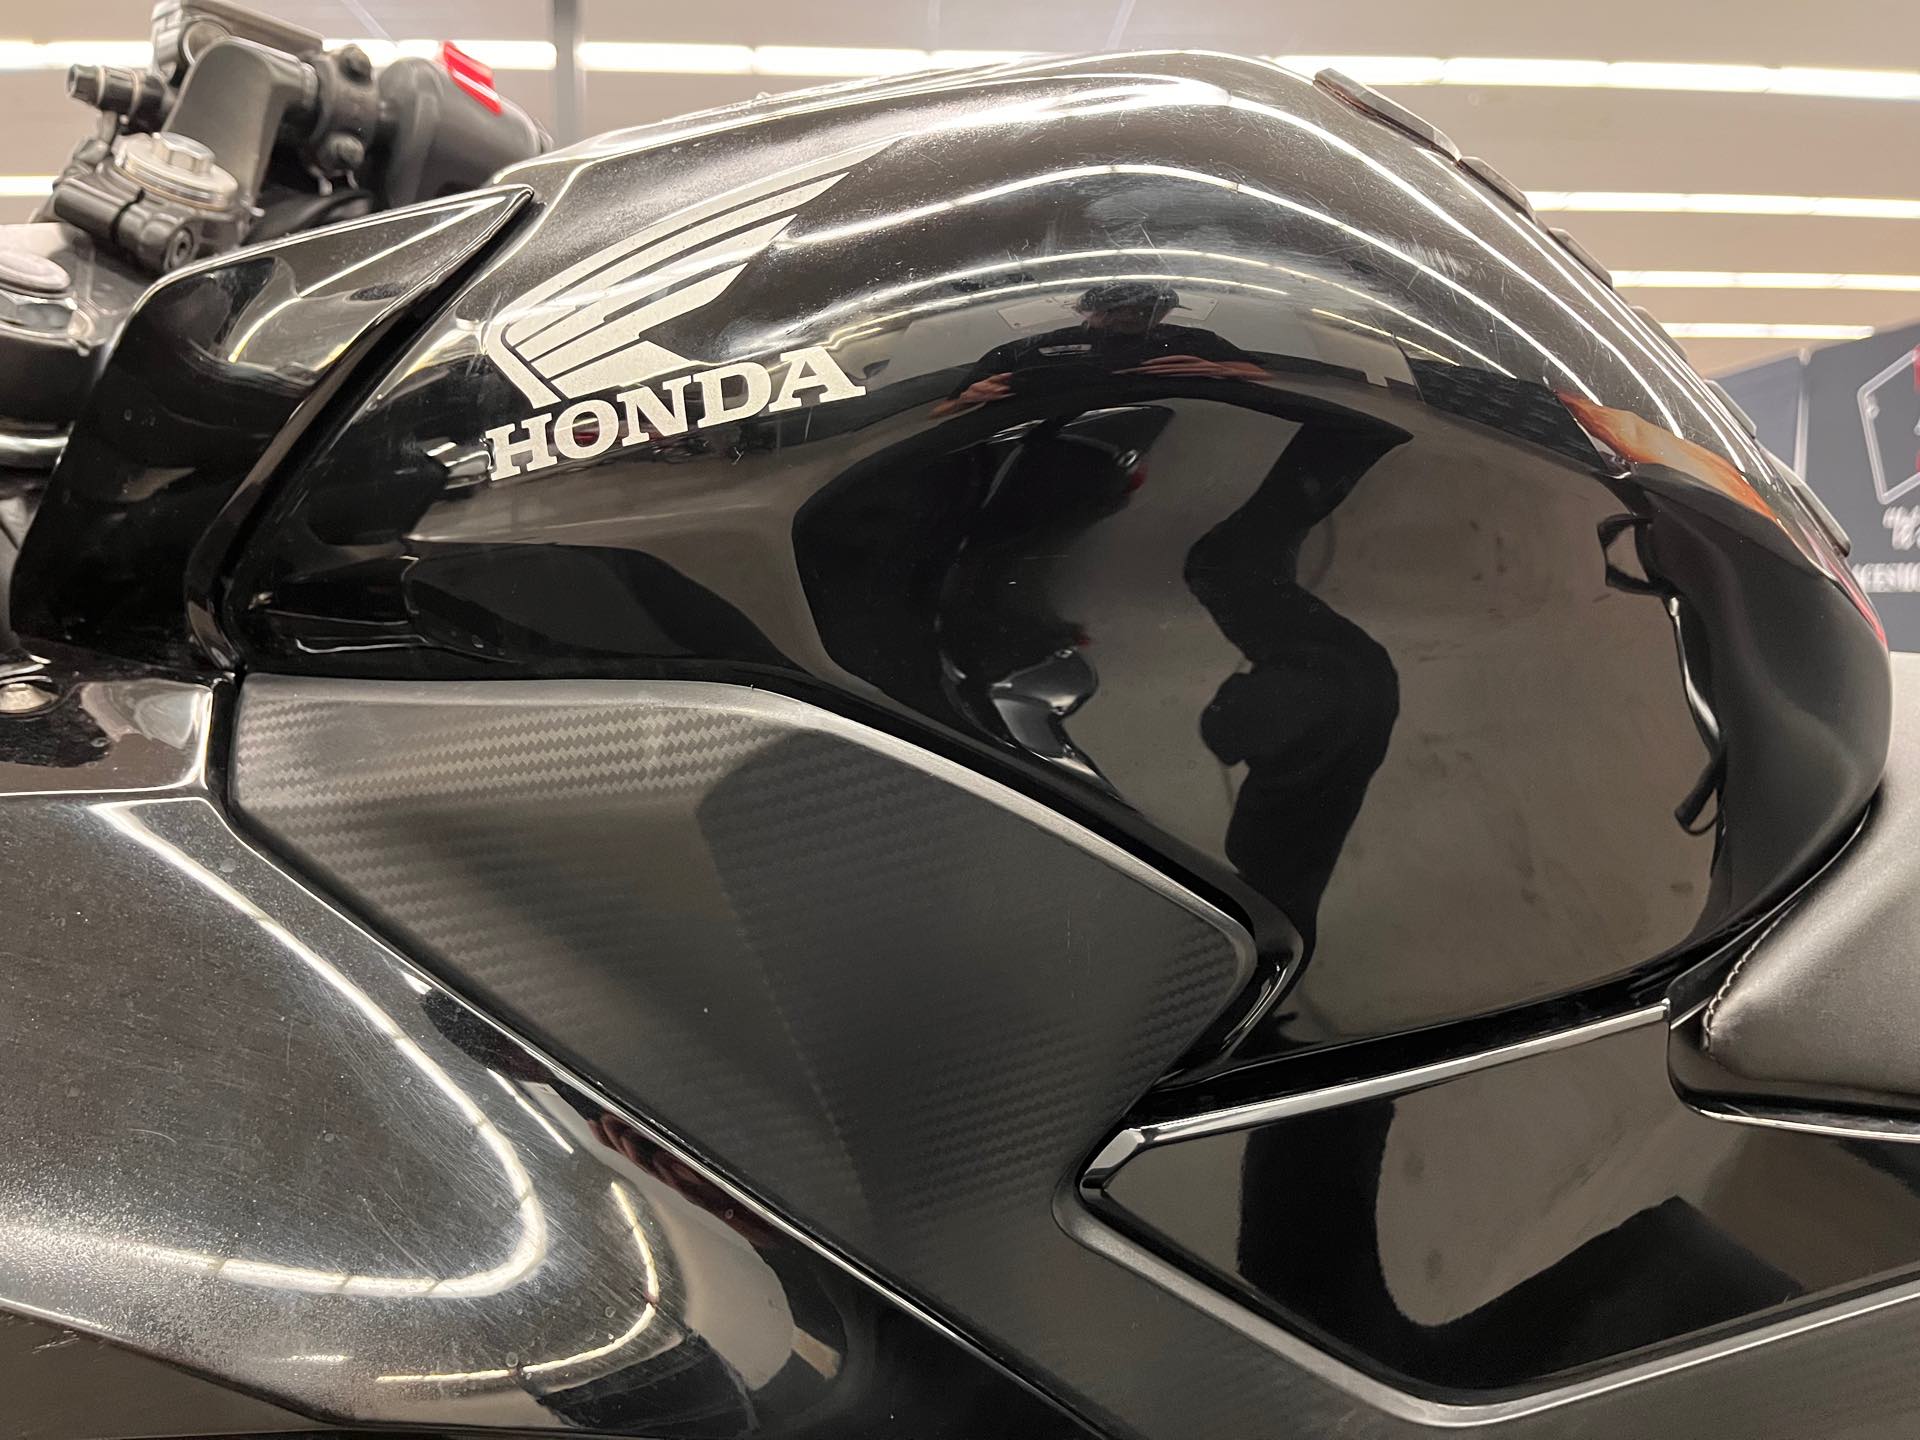 2015 Honda CBR 300R at Aces Motorcycles - Denver